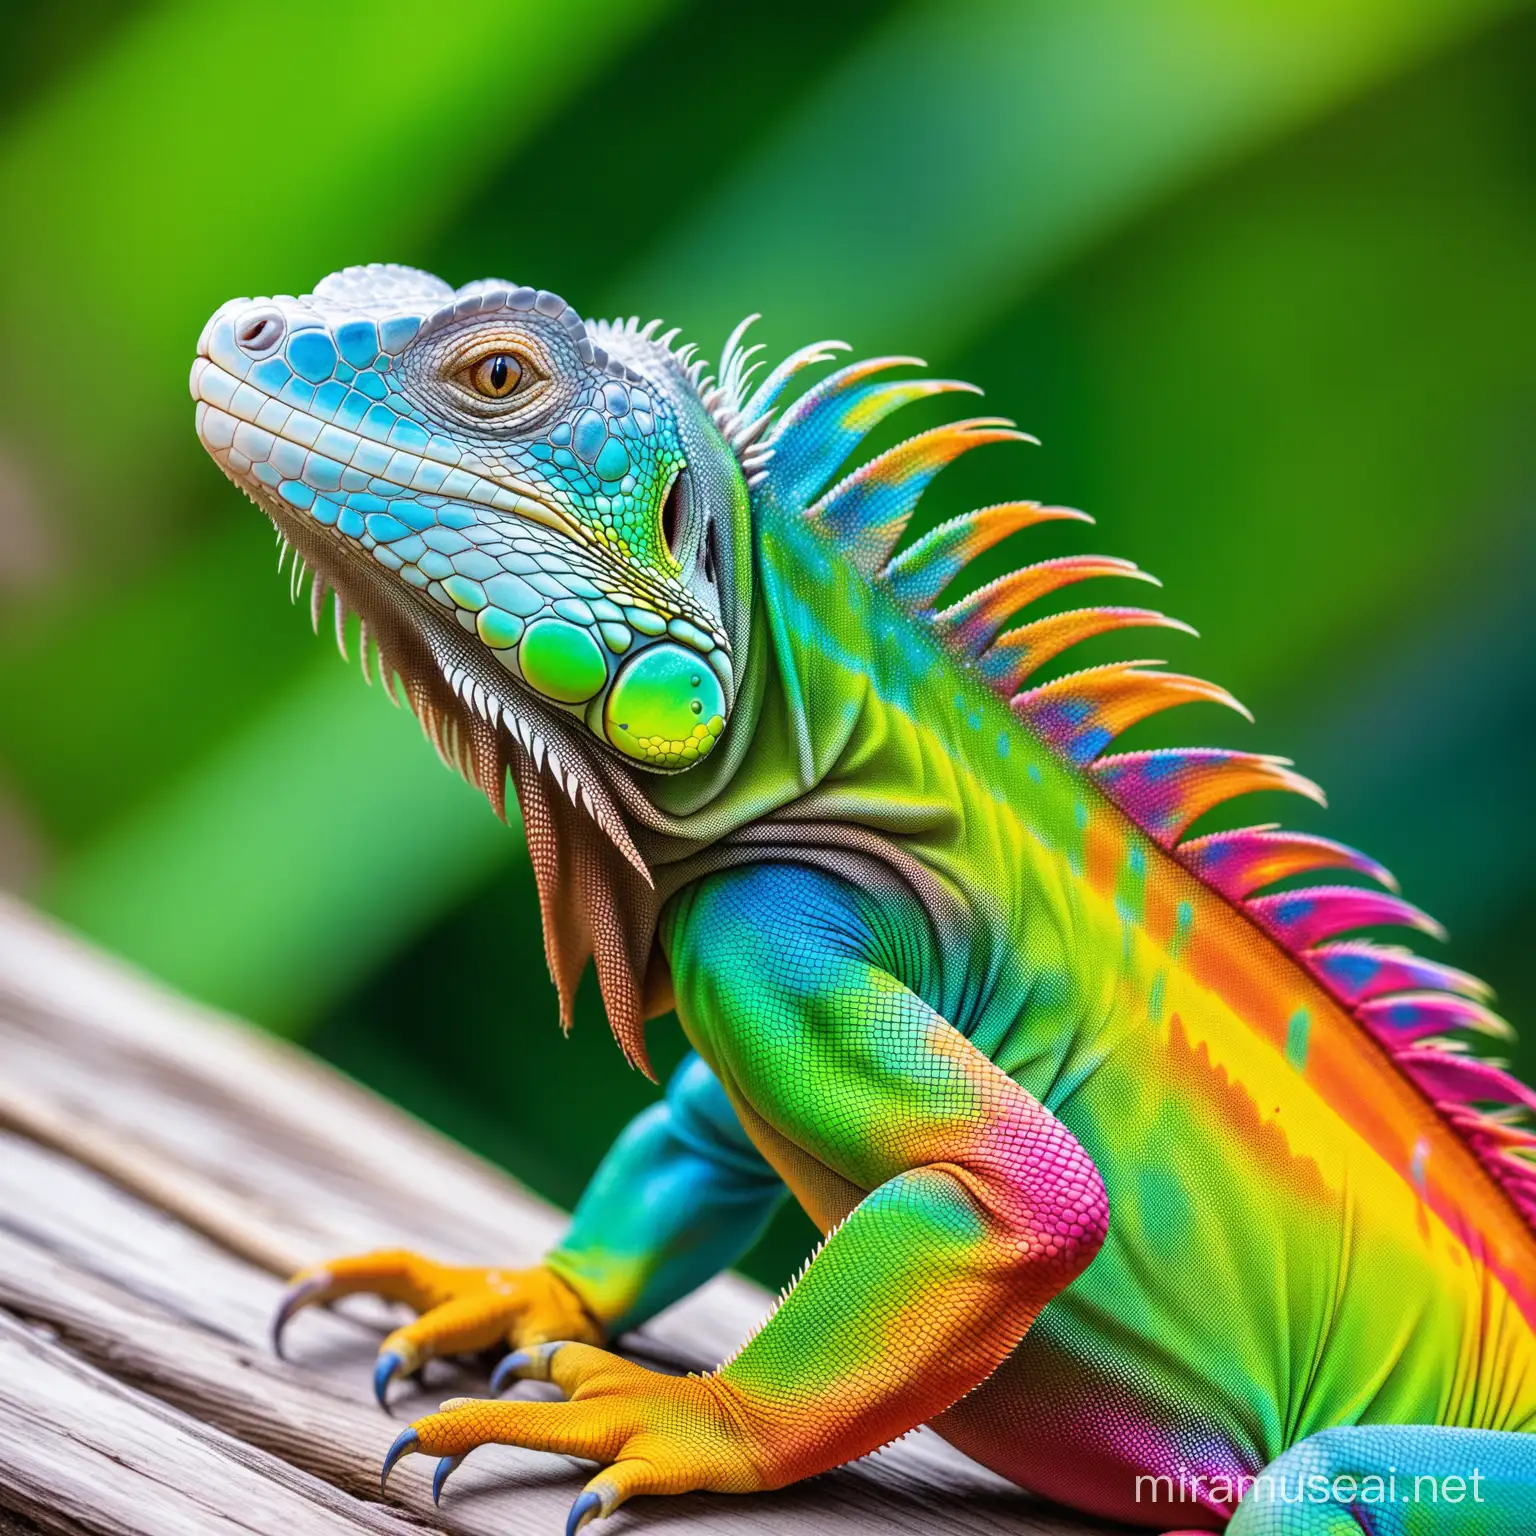 Vibrant Iguana Basking in a Lush Tropical Environment